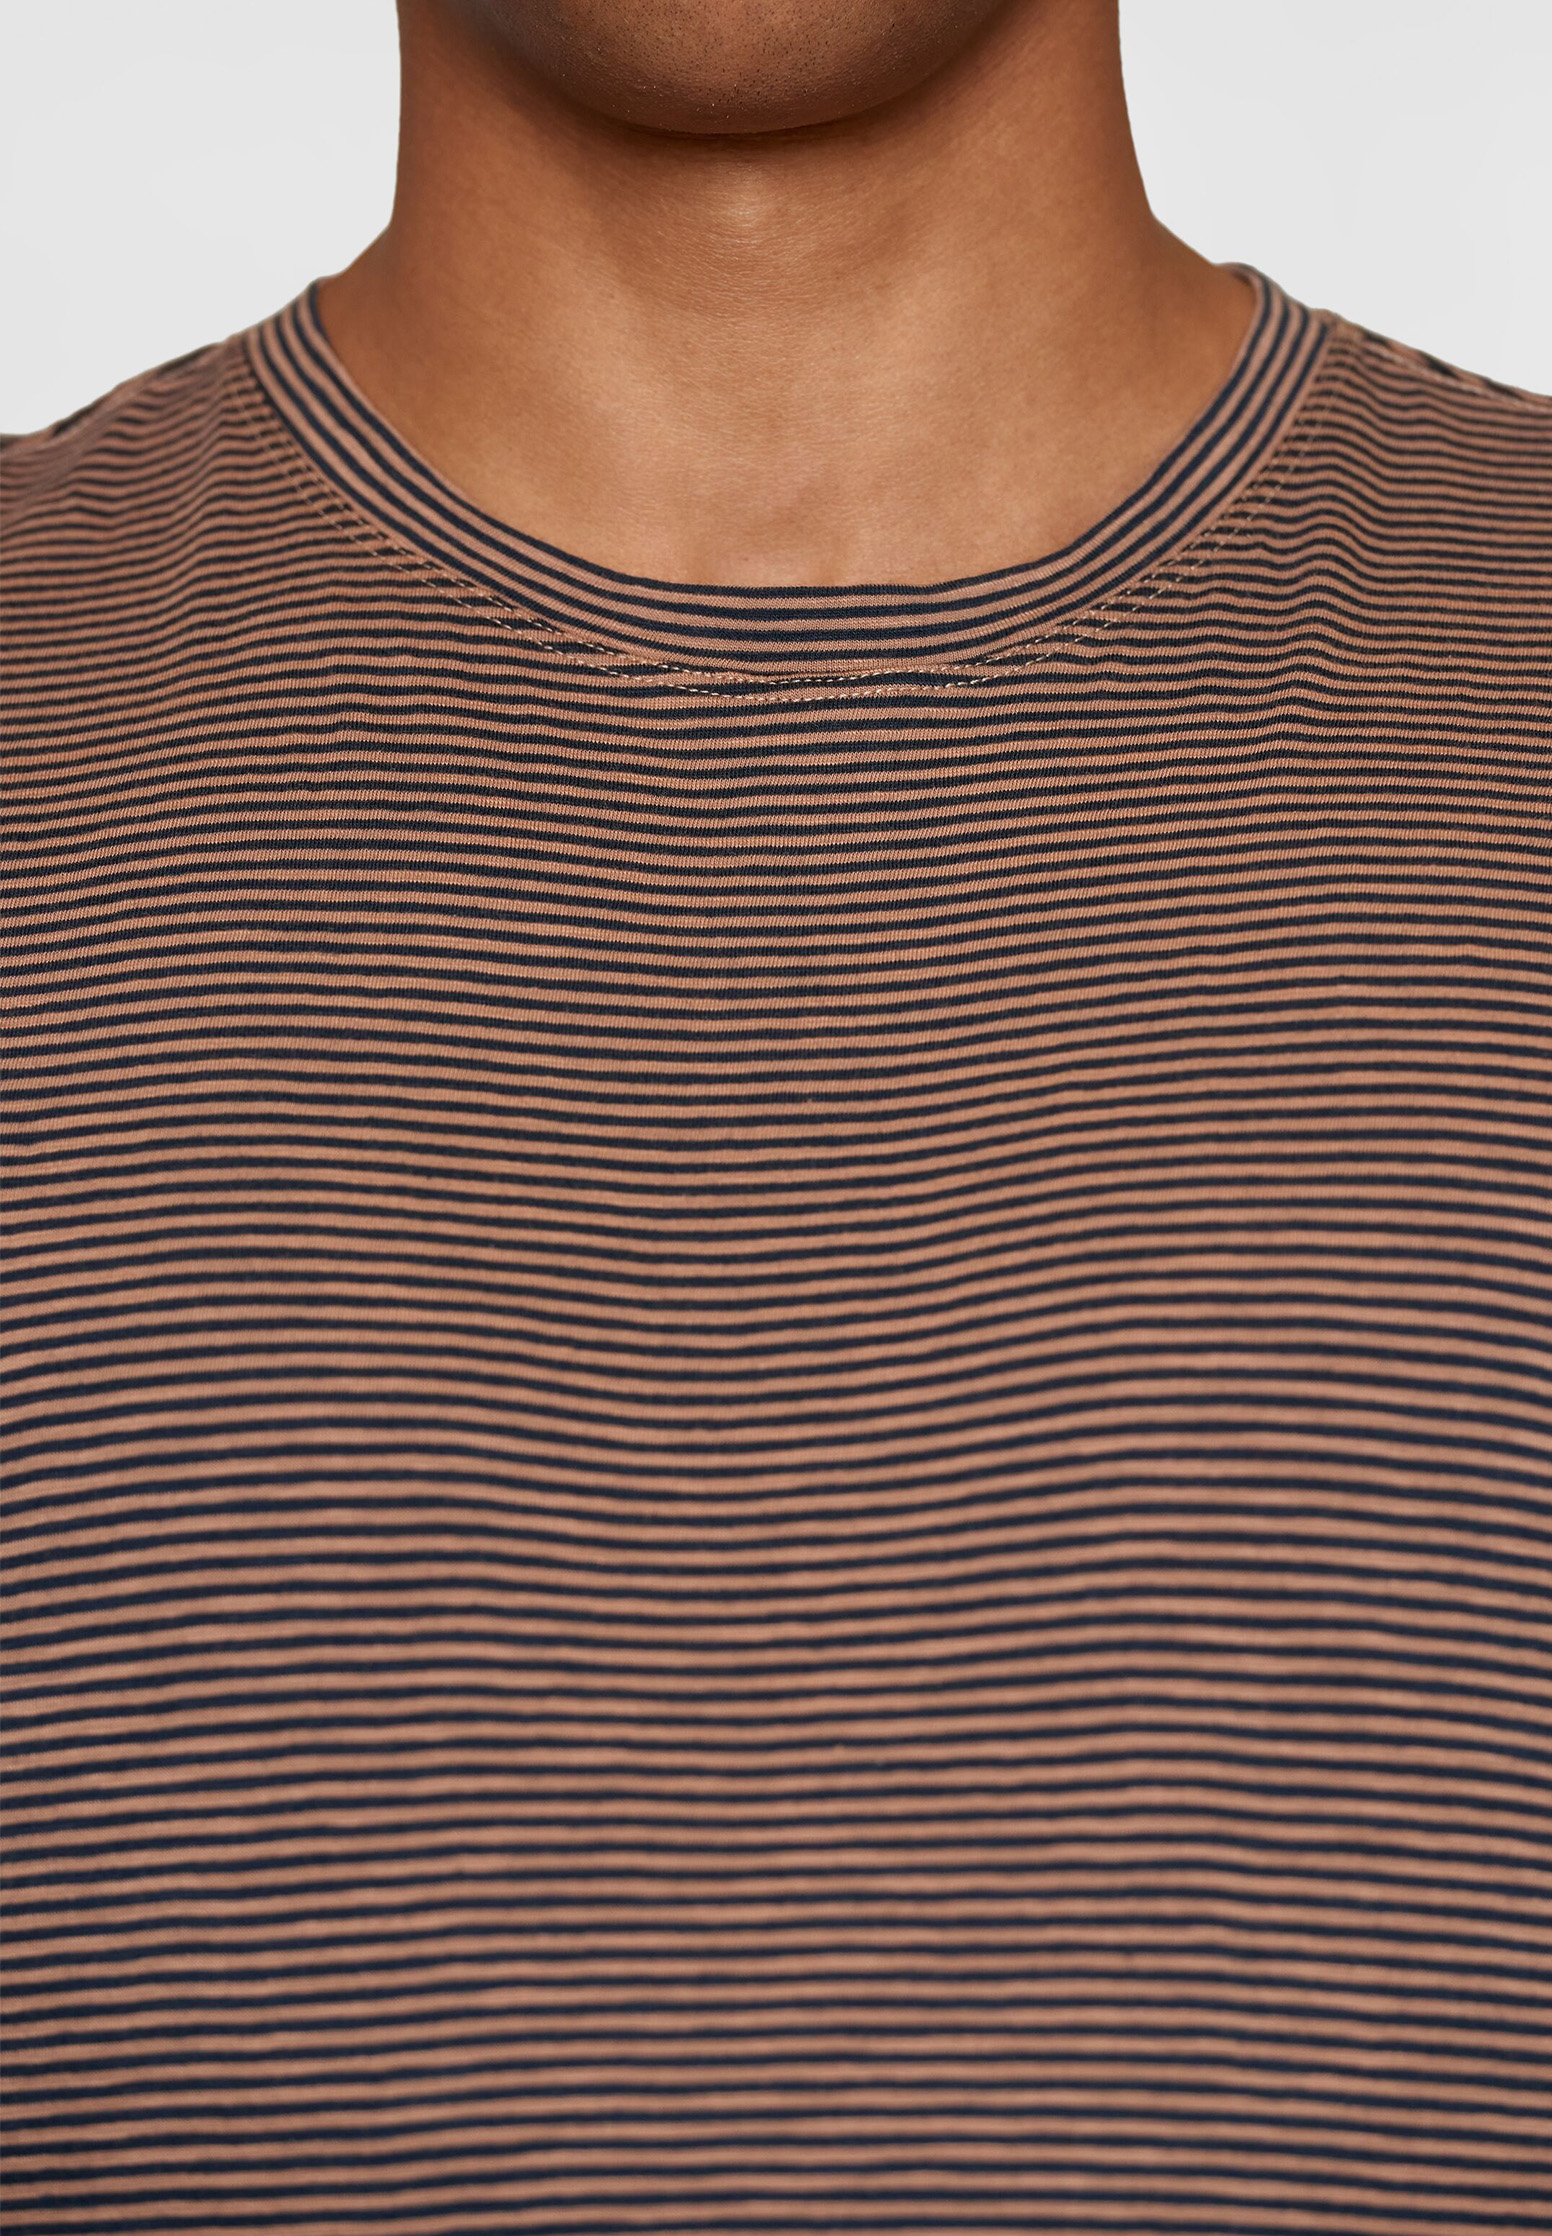 KNOWLEDGECOTTON APPAREL Striped Slub Tee brown stripe L